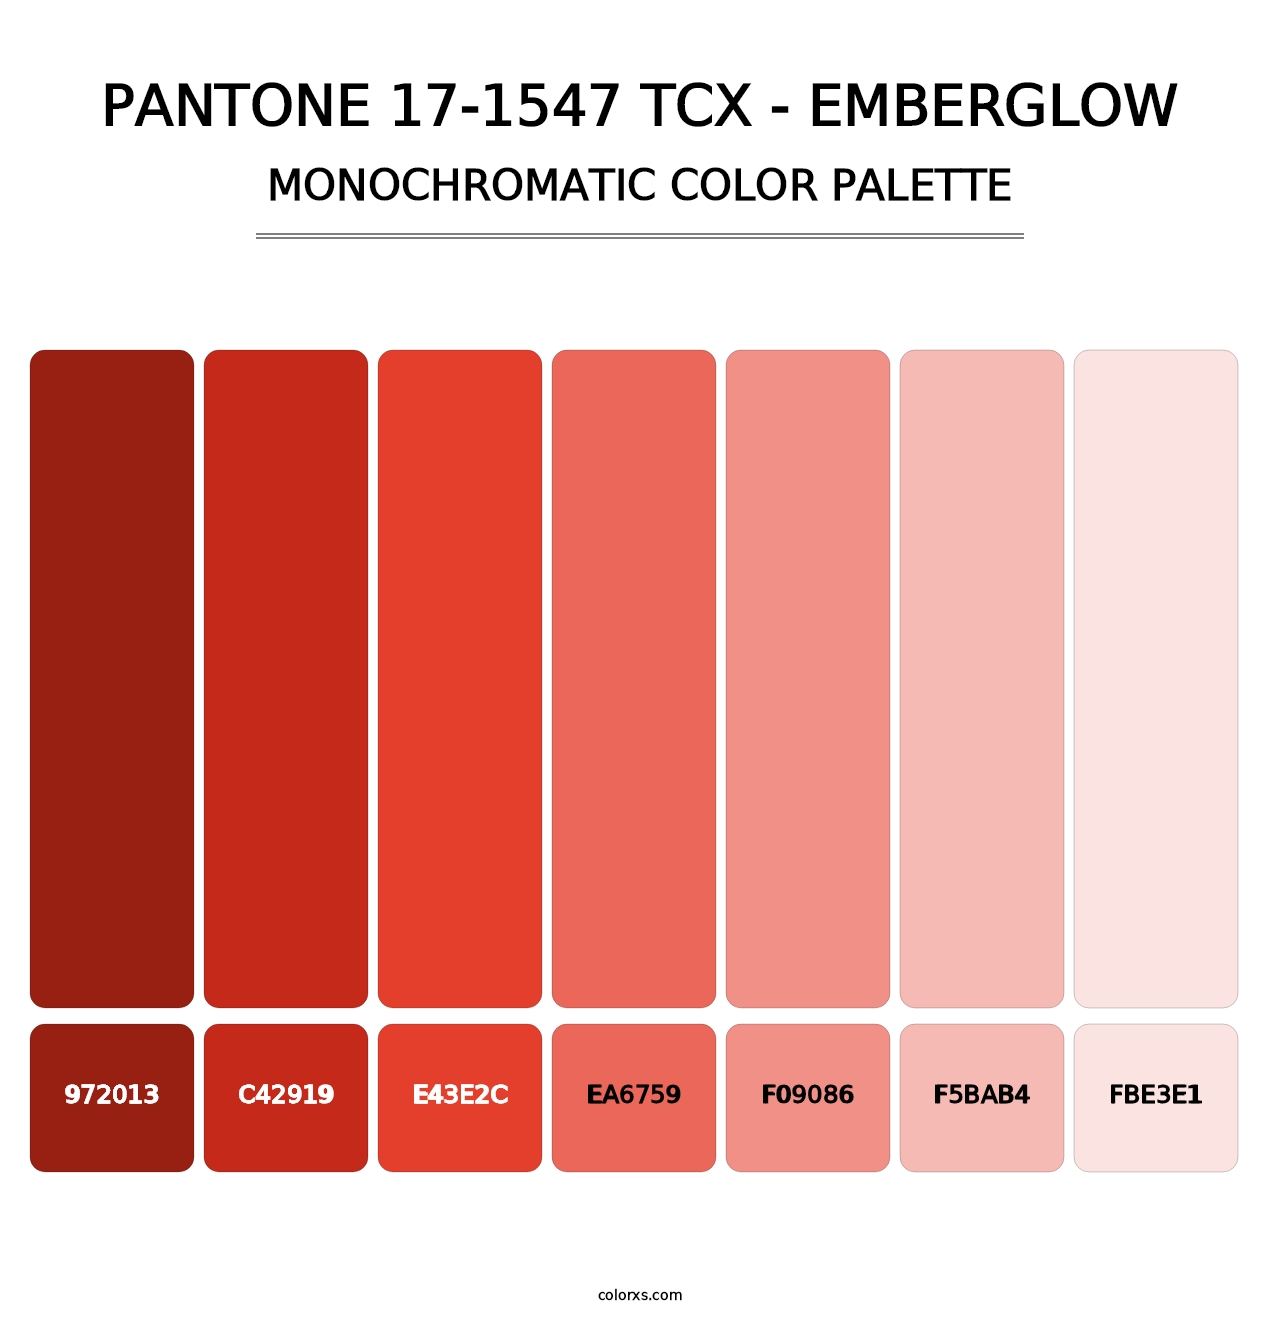 PANTONE 17-1547 TCX - Emberglow - Monochromatic Color Palette